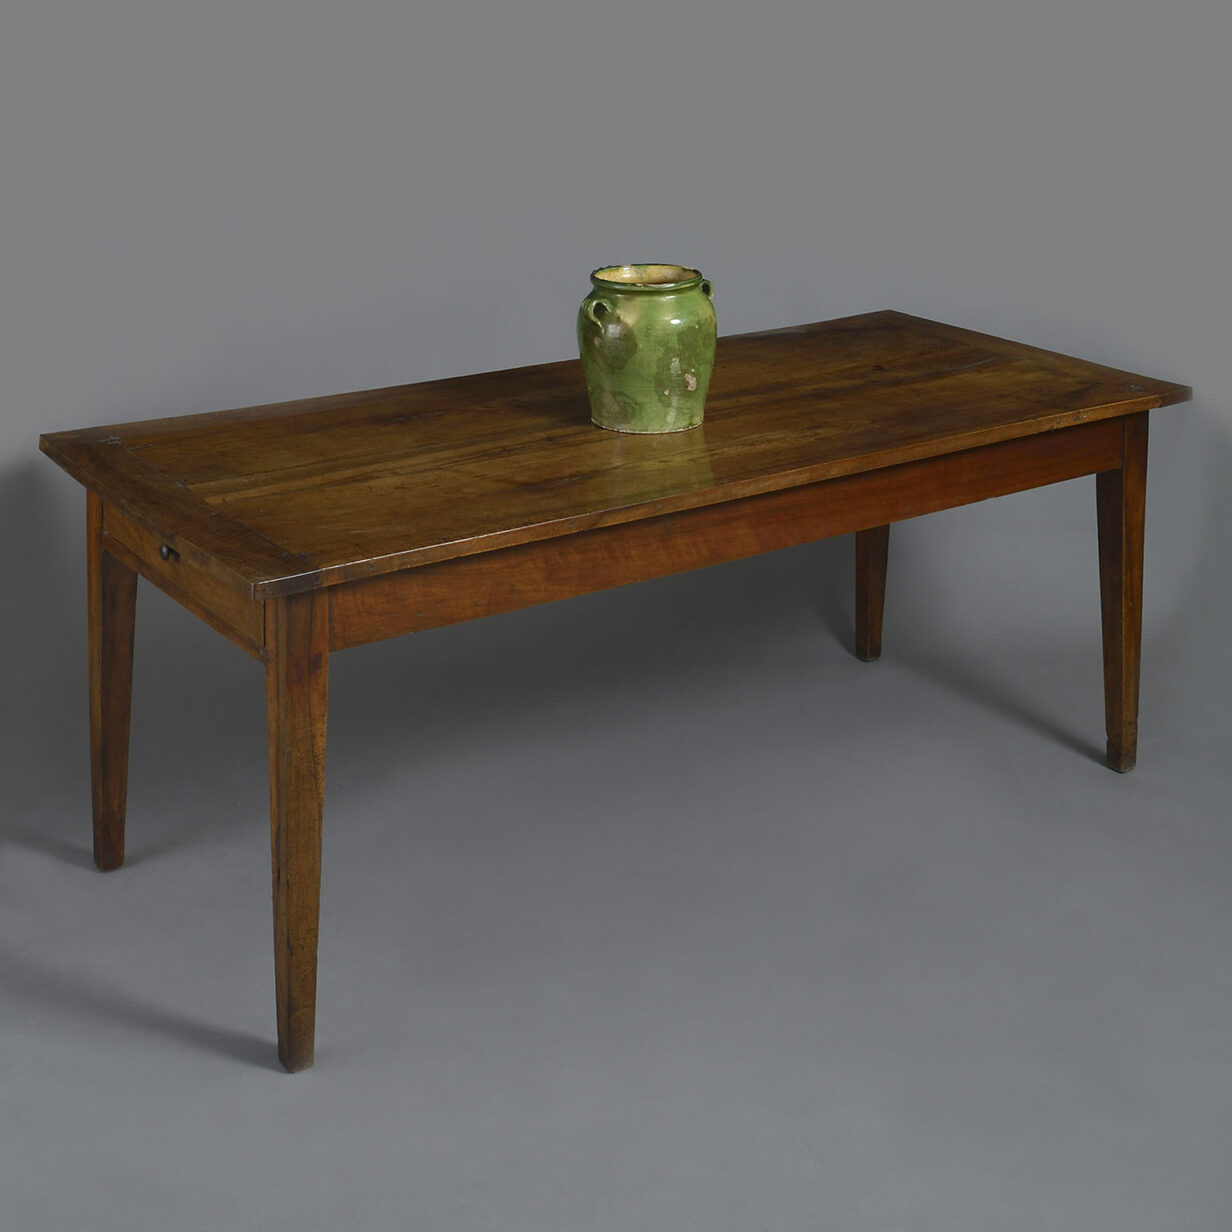 Late 18th century walnut farmhouse dining table